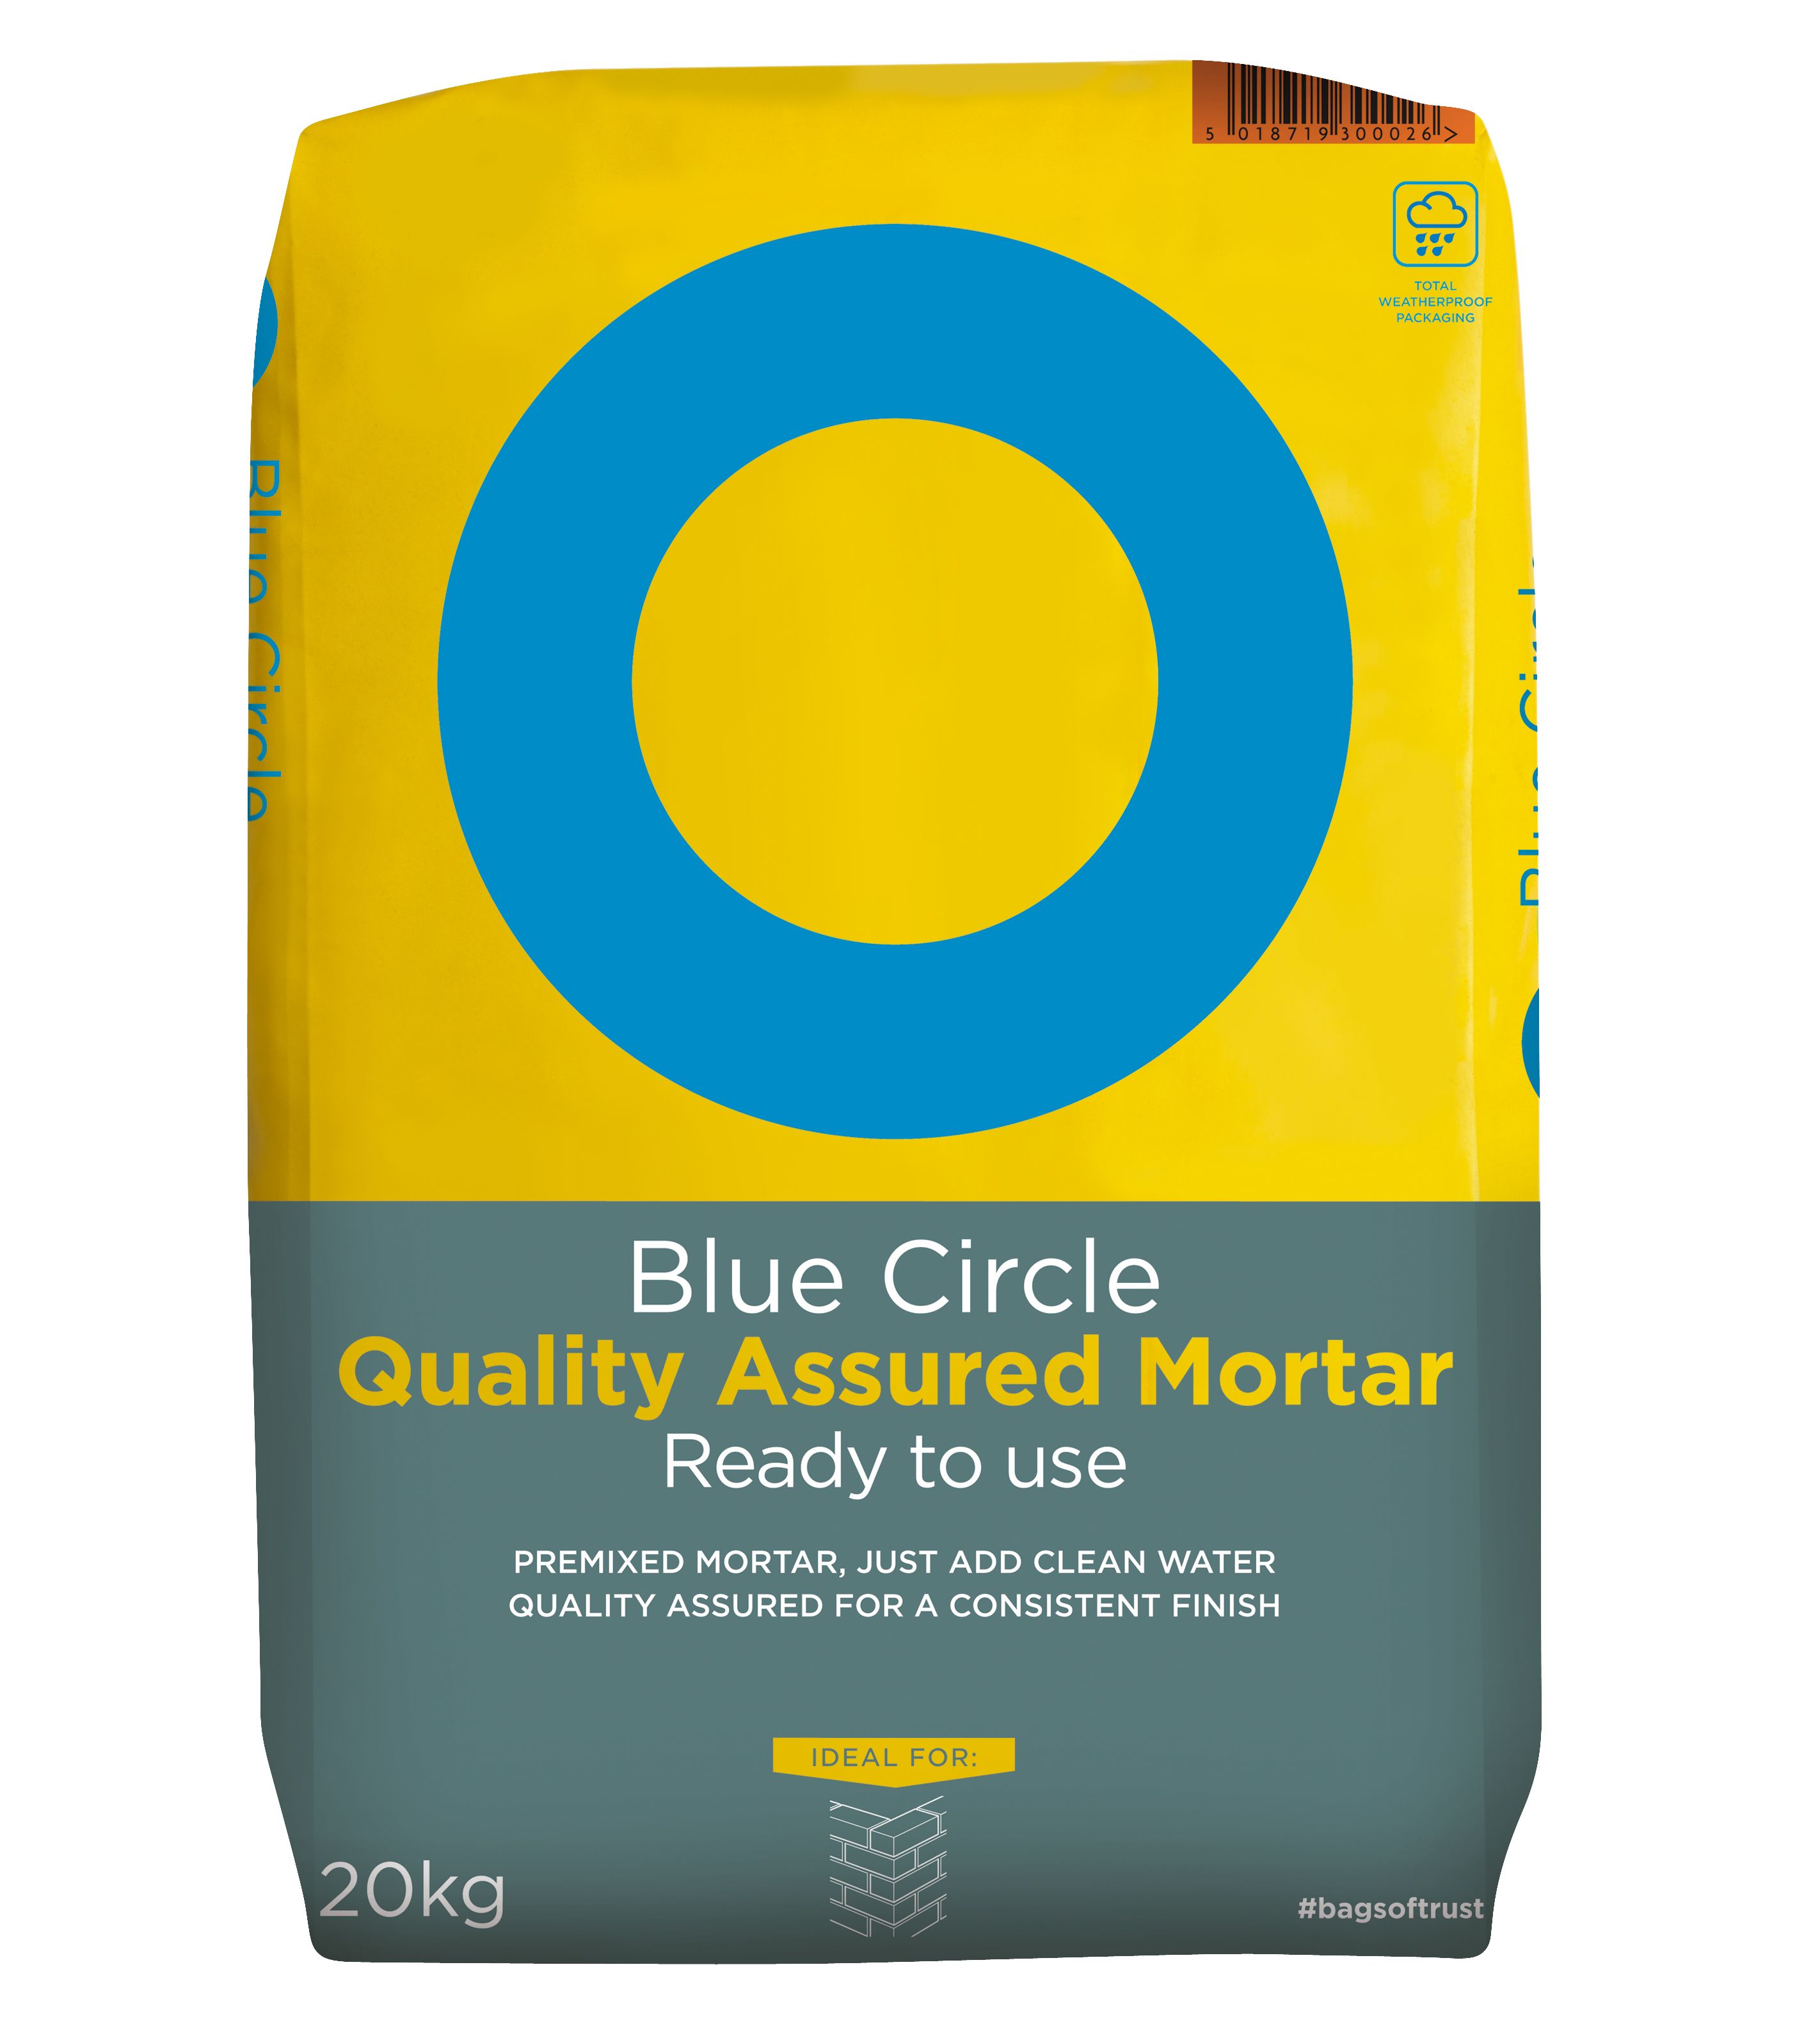 Blue Circle Quality assured Mortar, 20kg Bag - Ready mixed